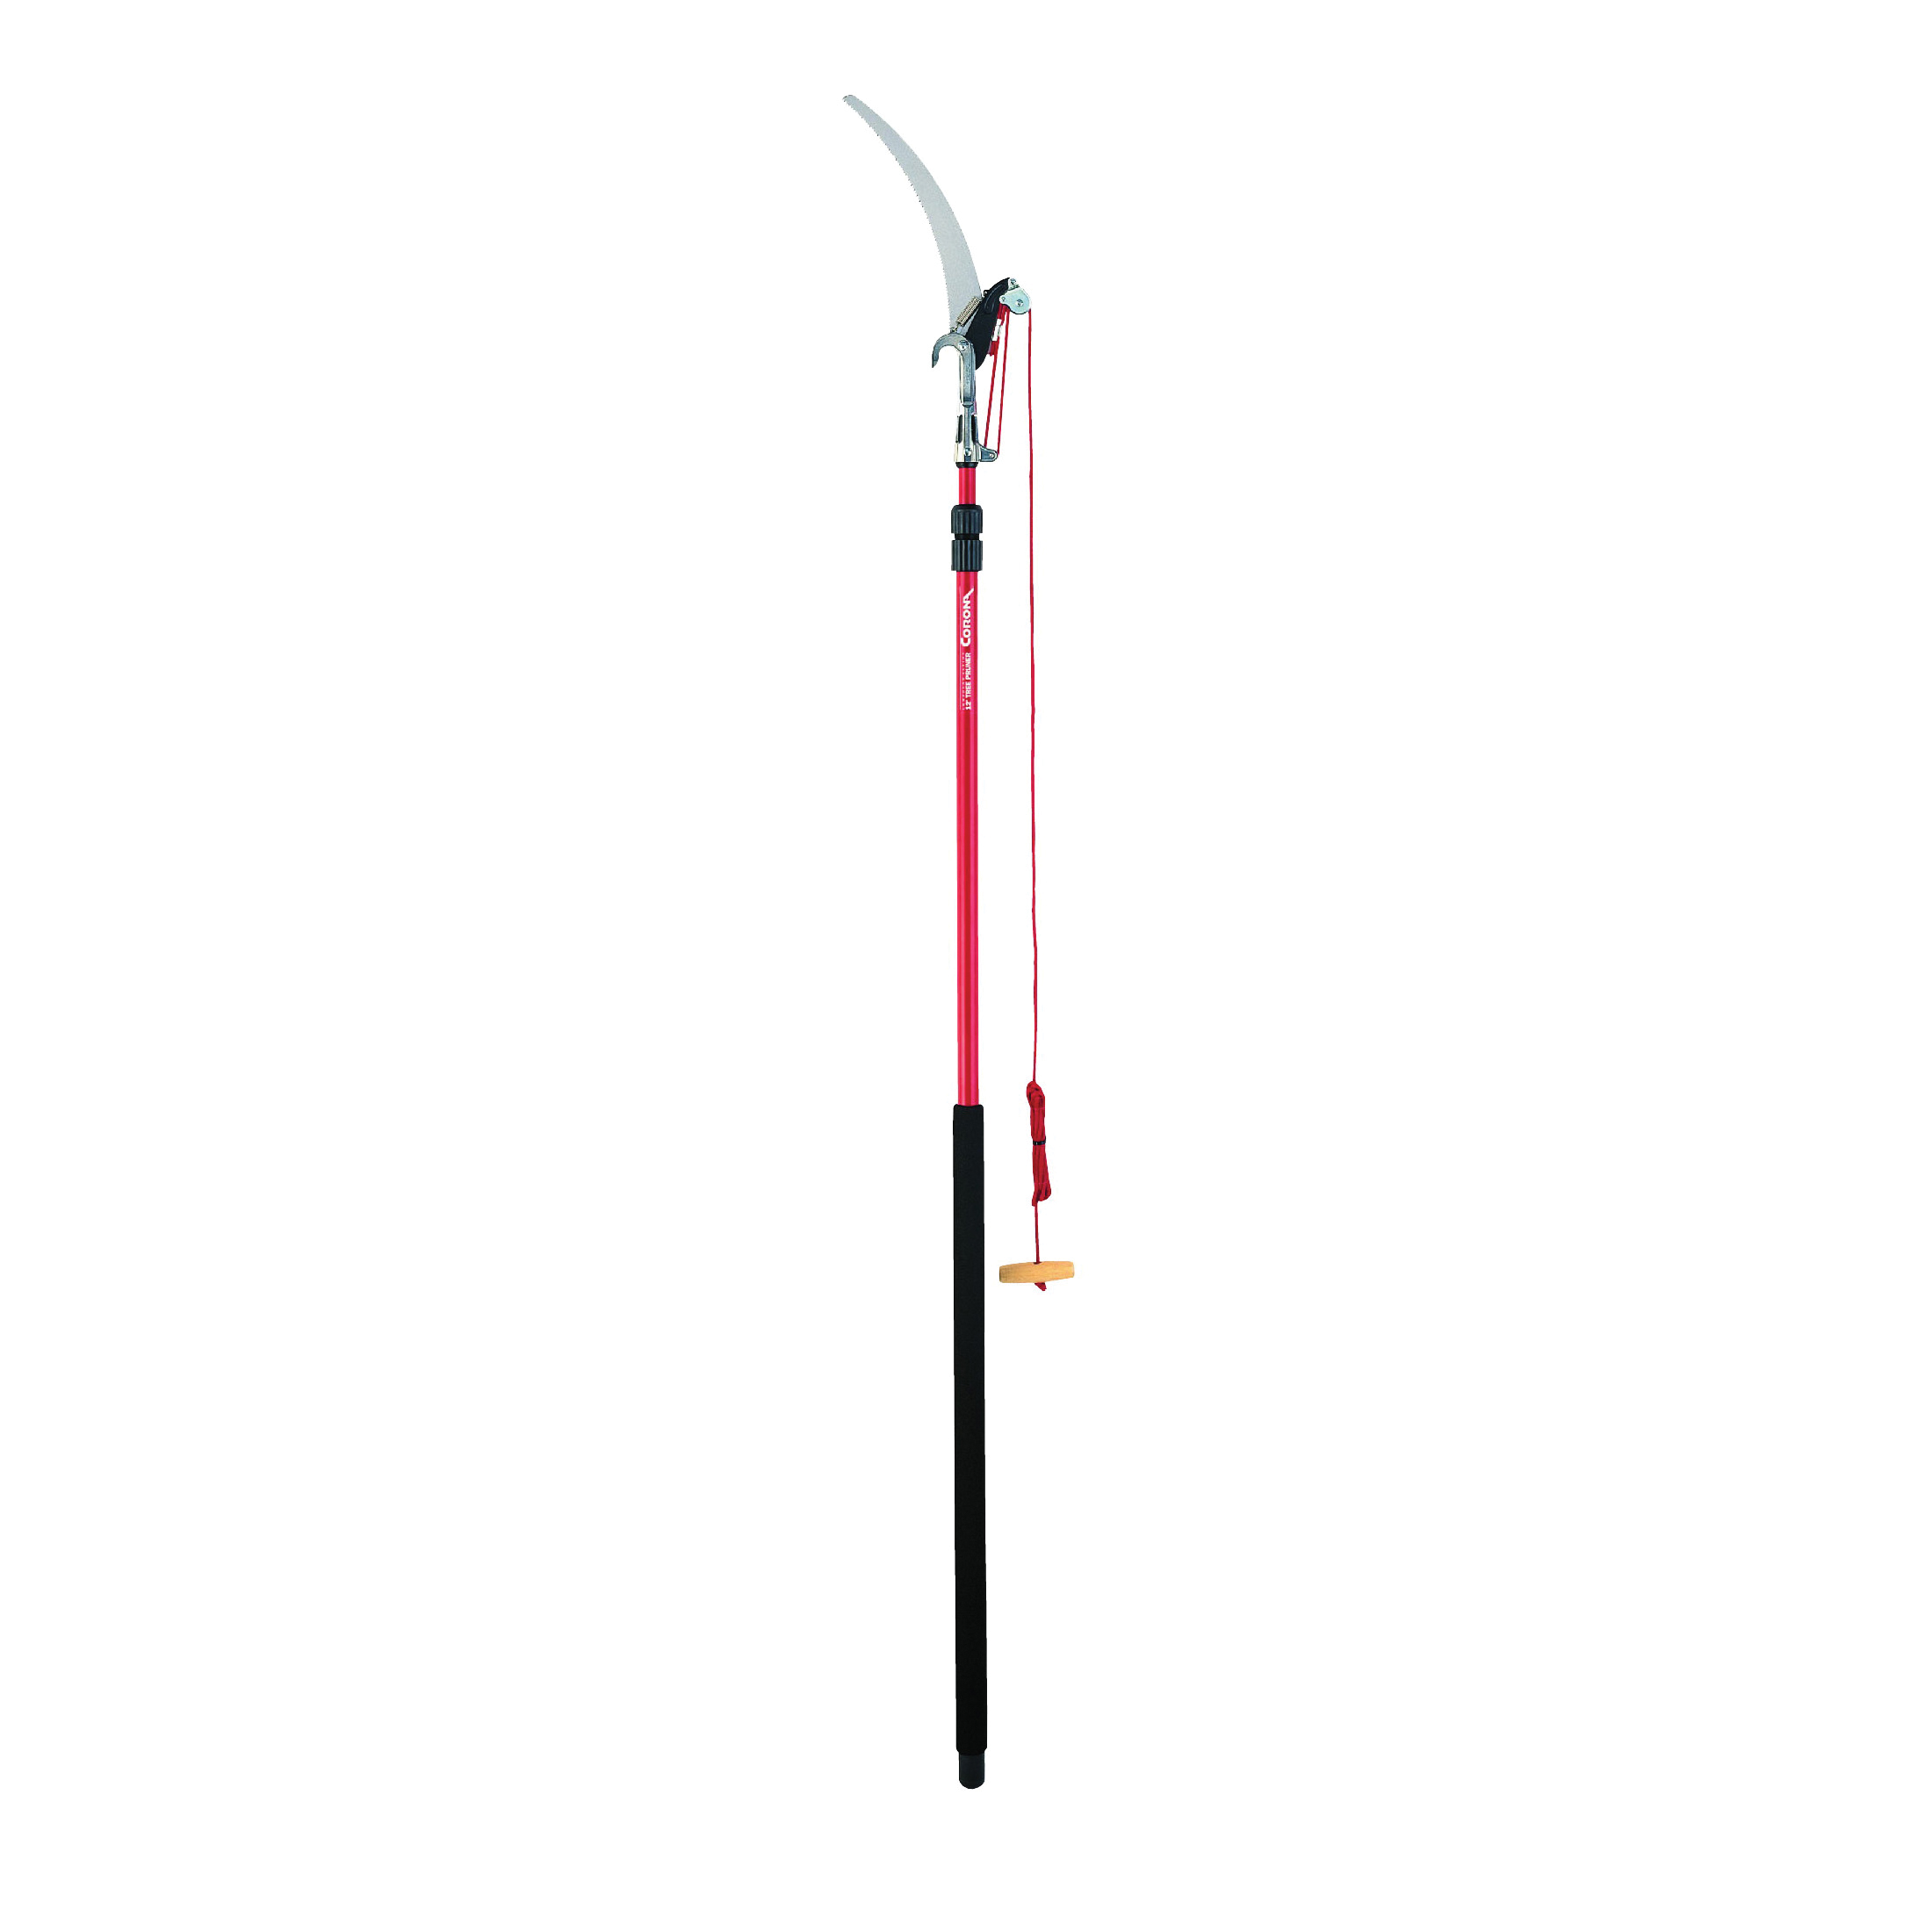 TP 3841 Tree Pruner, 1 in Cutting Capacity, Conventional Saw Blade, Steel Blade, Comfort-Grip Handle